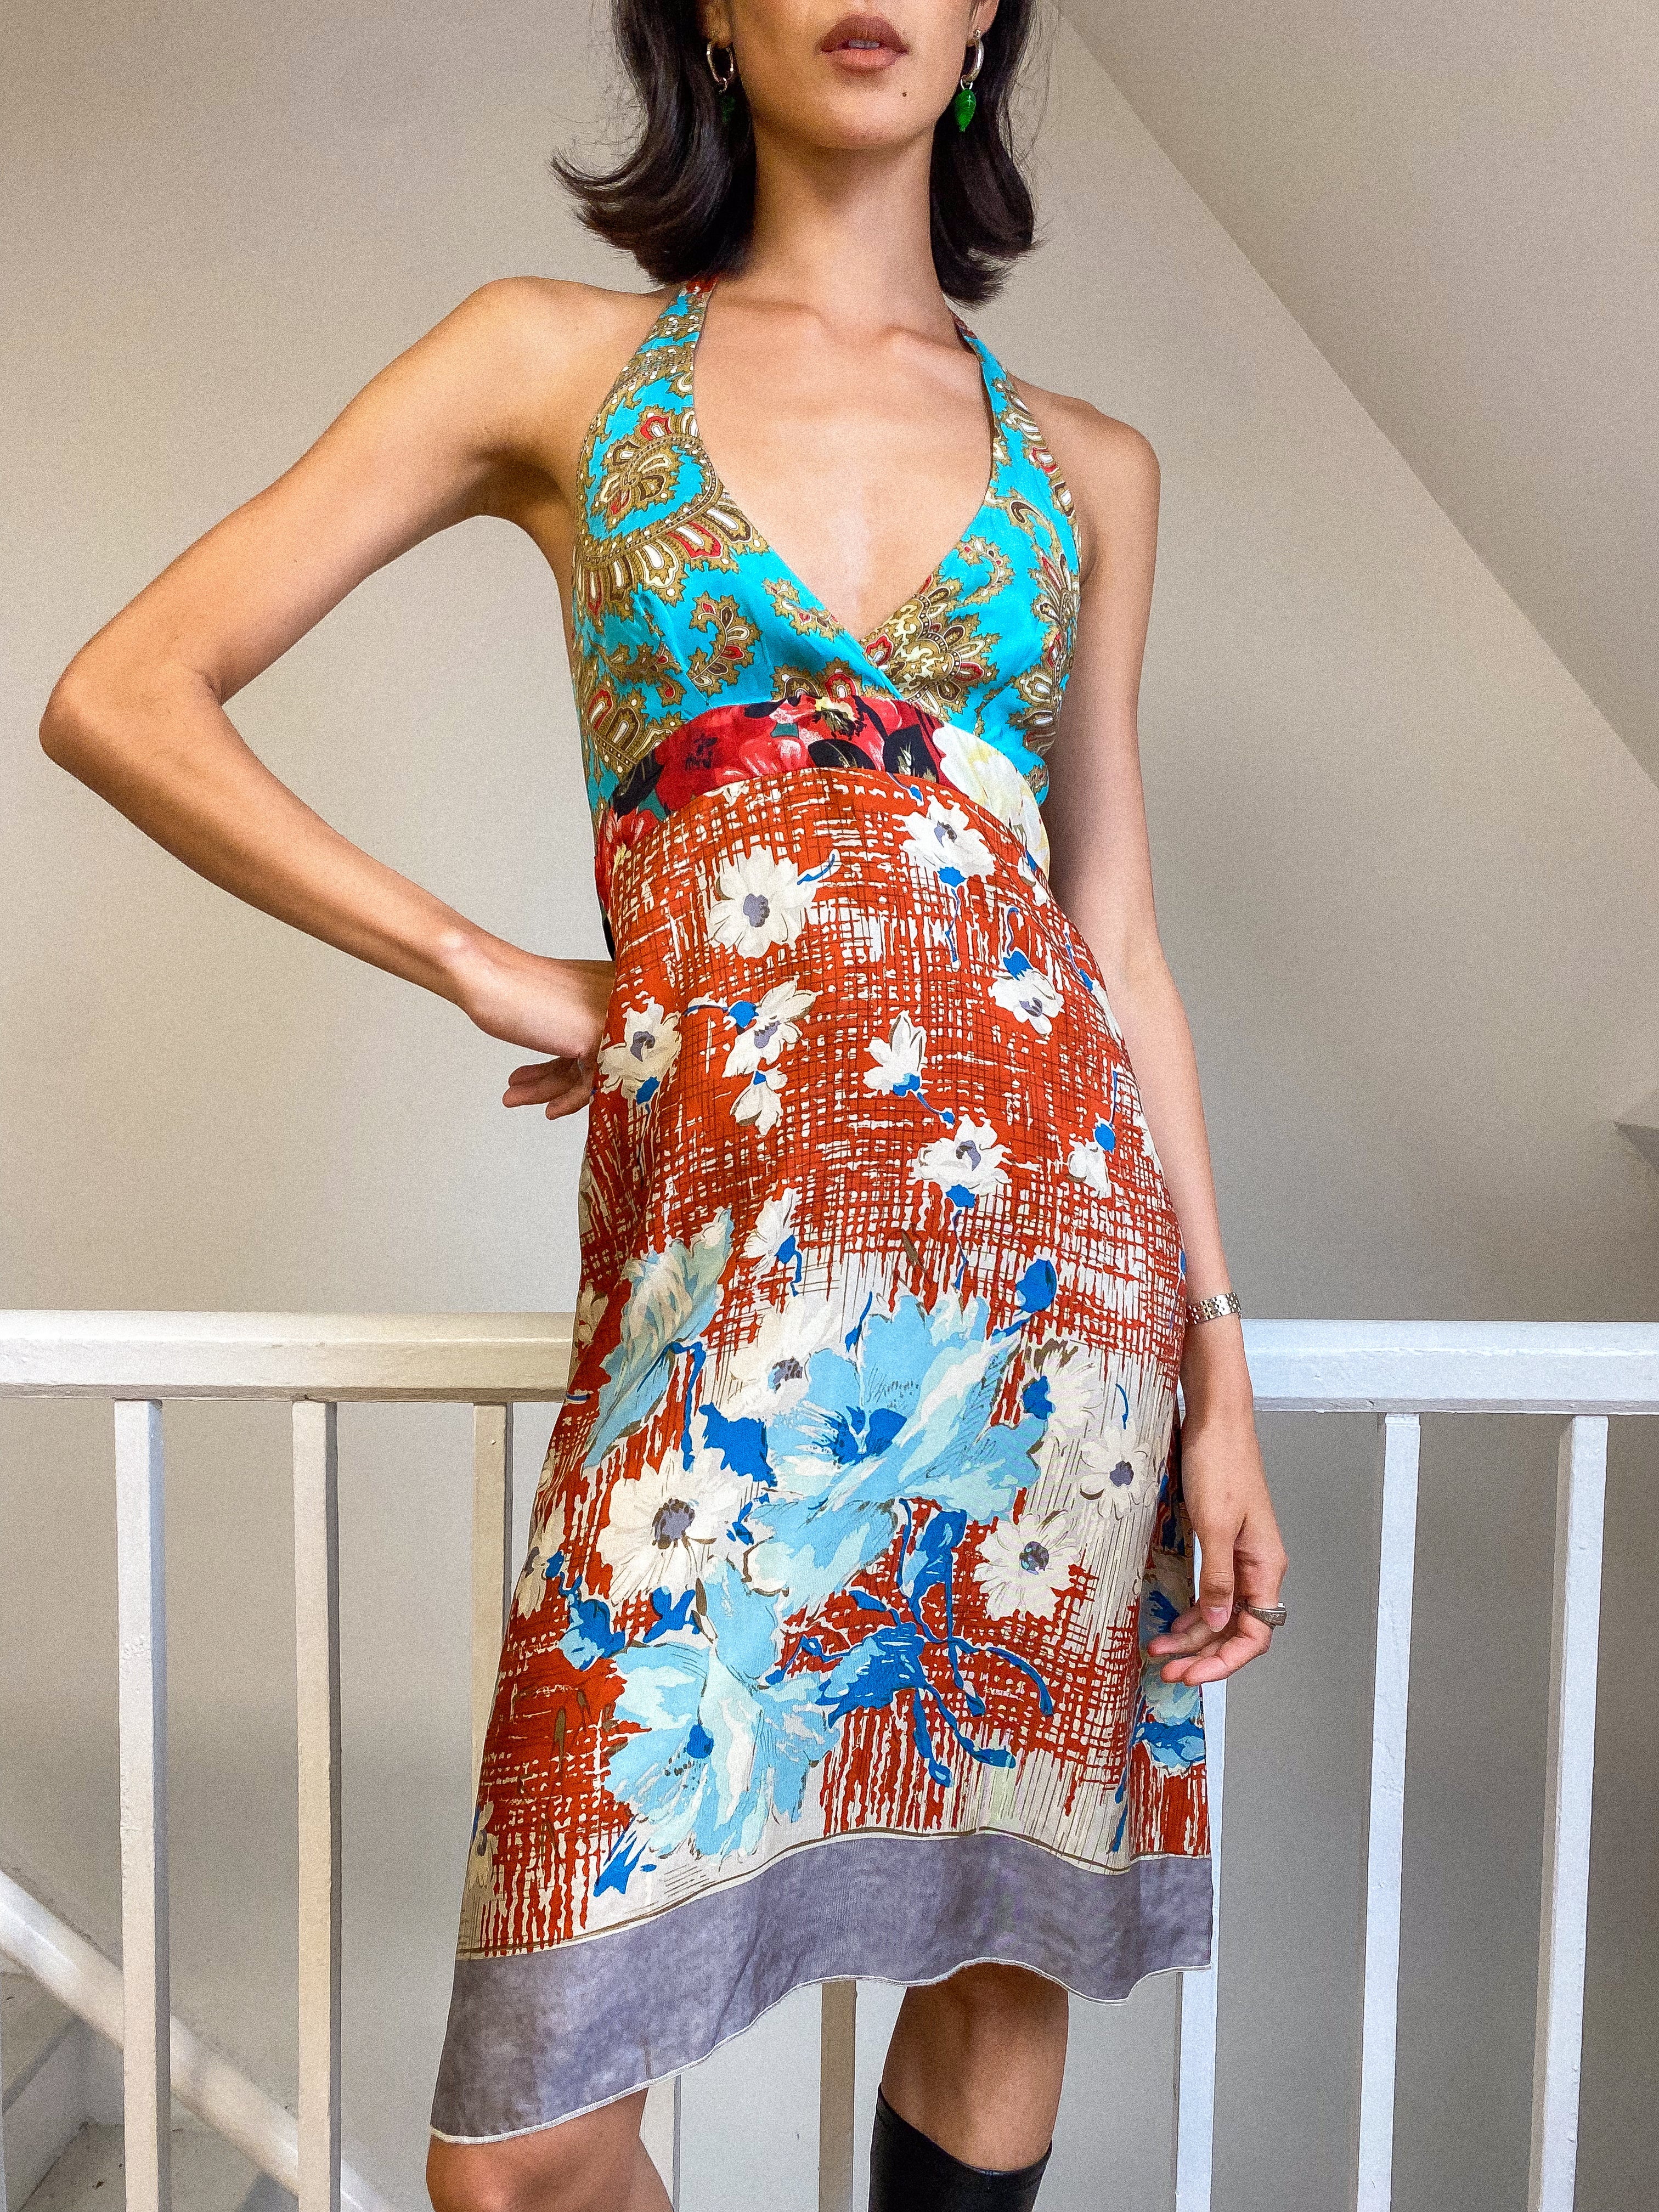 Silk Pattern Halter Dress Size S - M